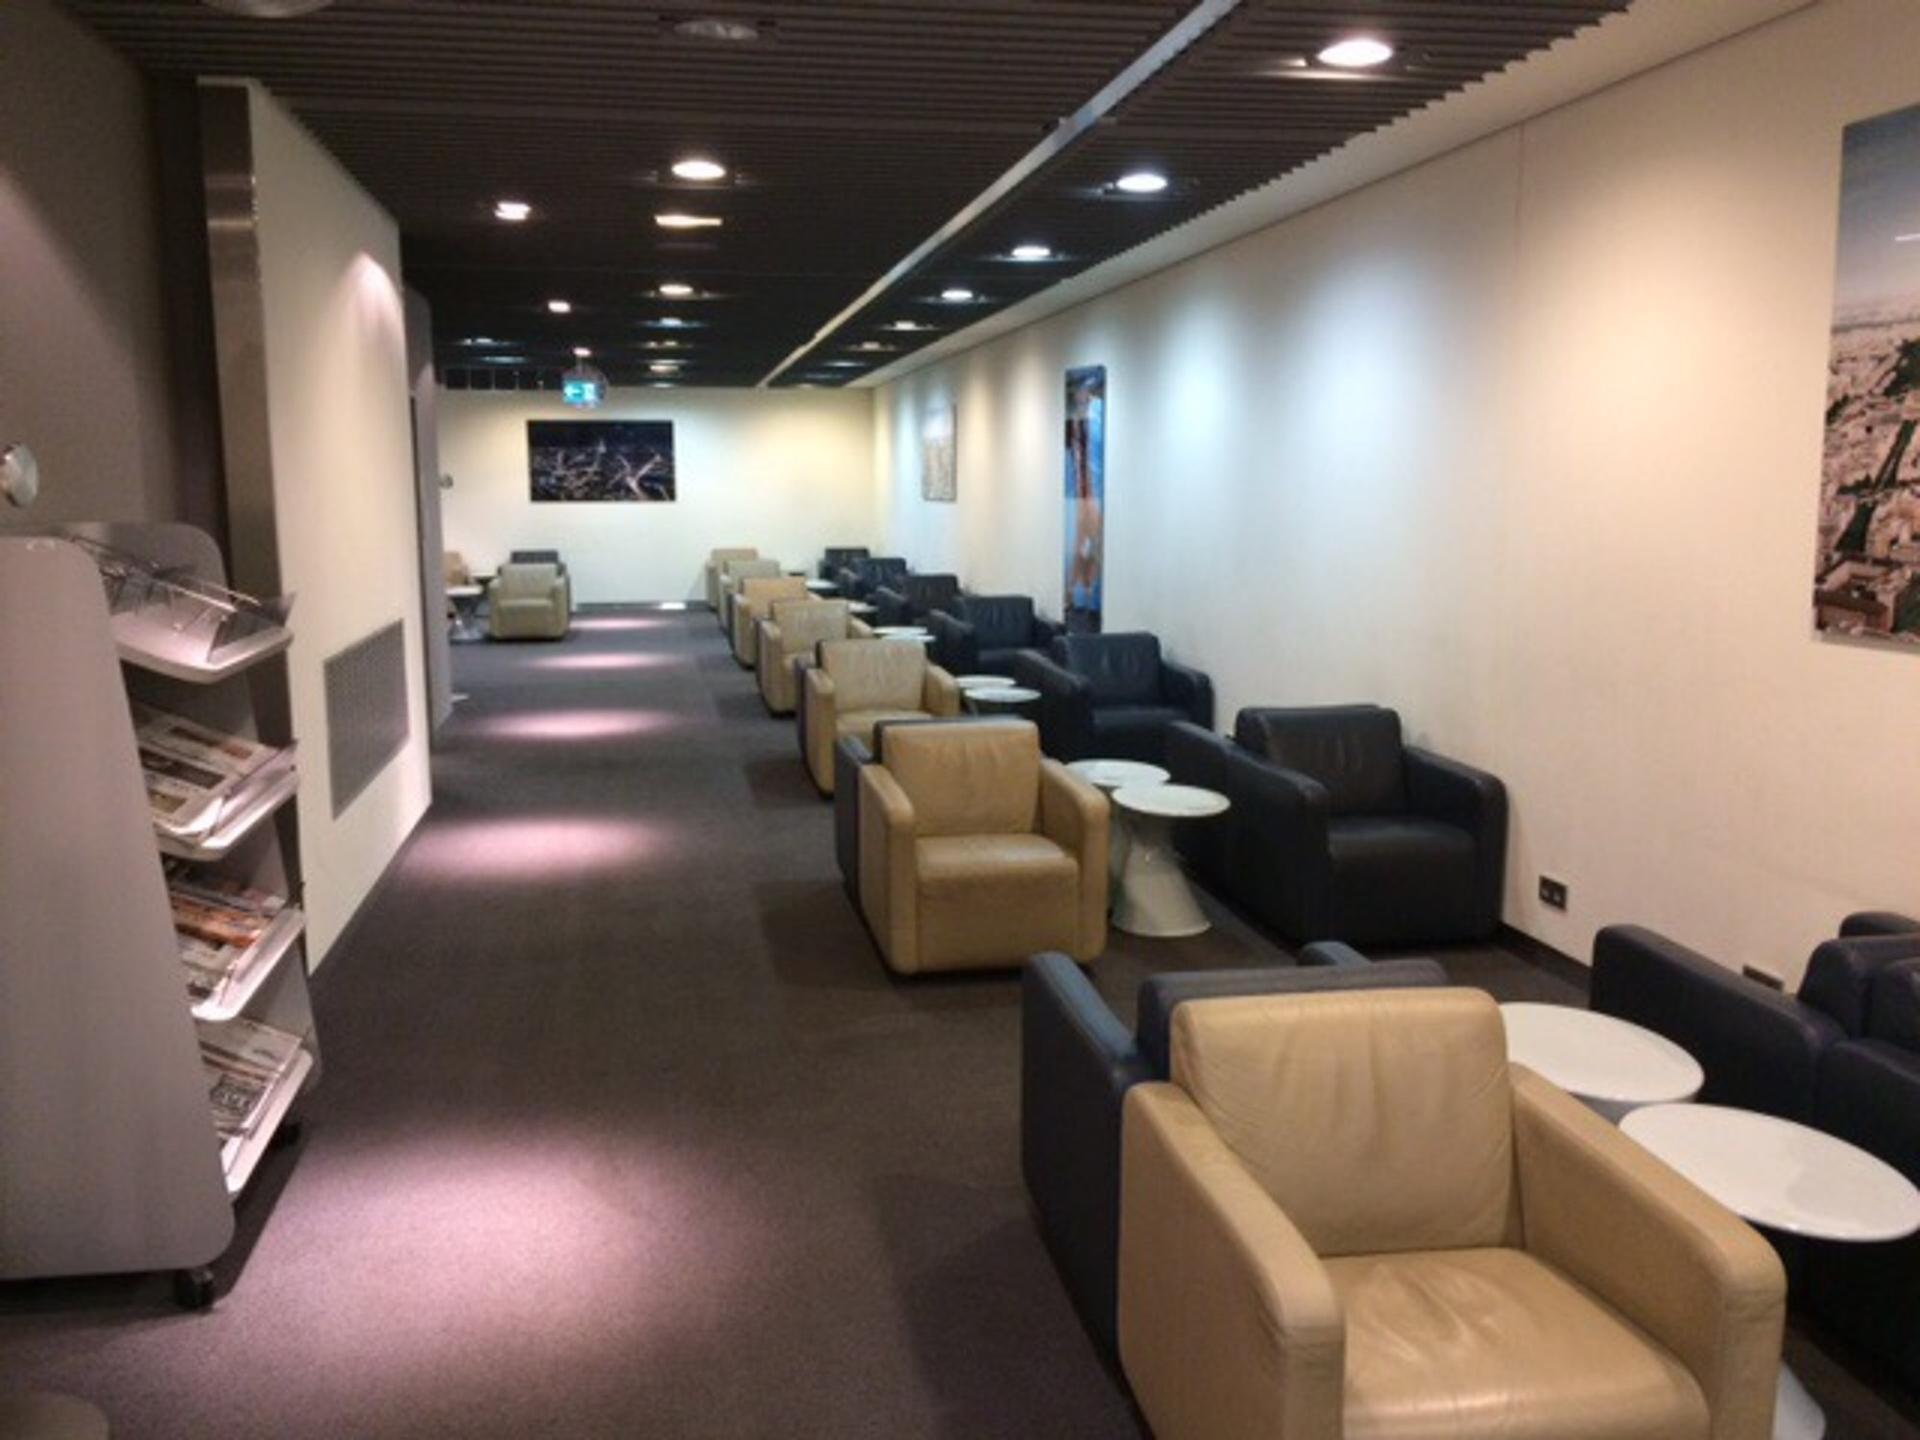 Lufthansa Business Lounge image 4 of 18